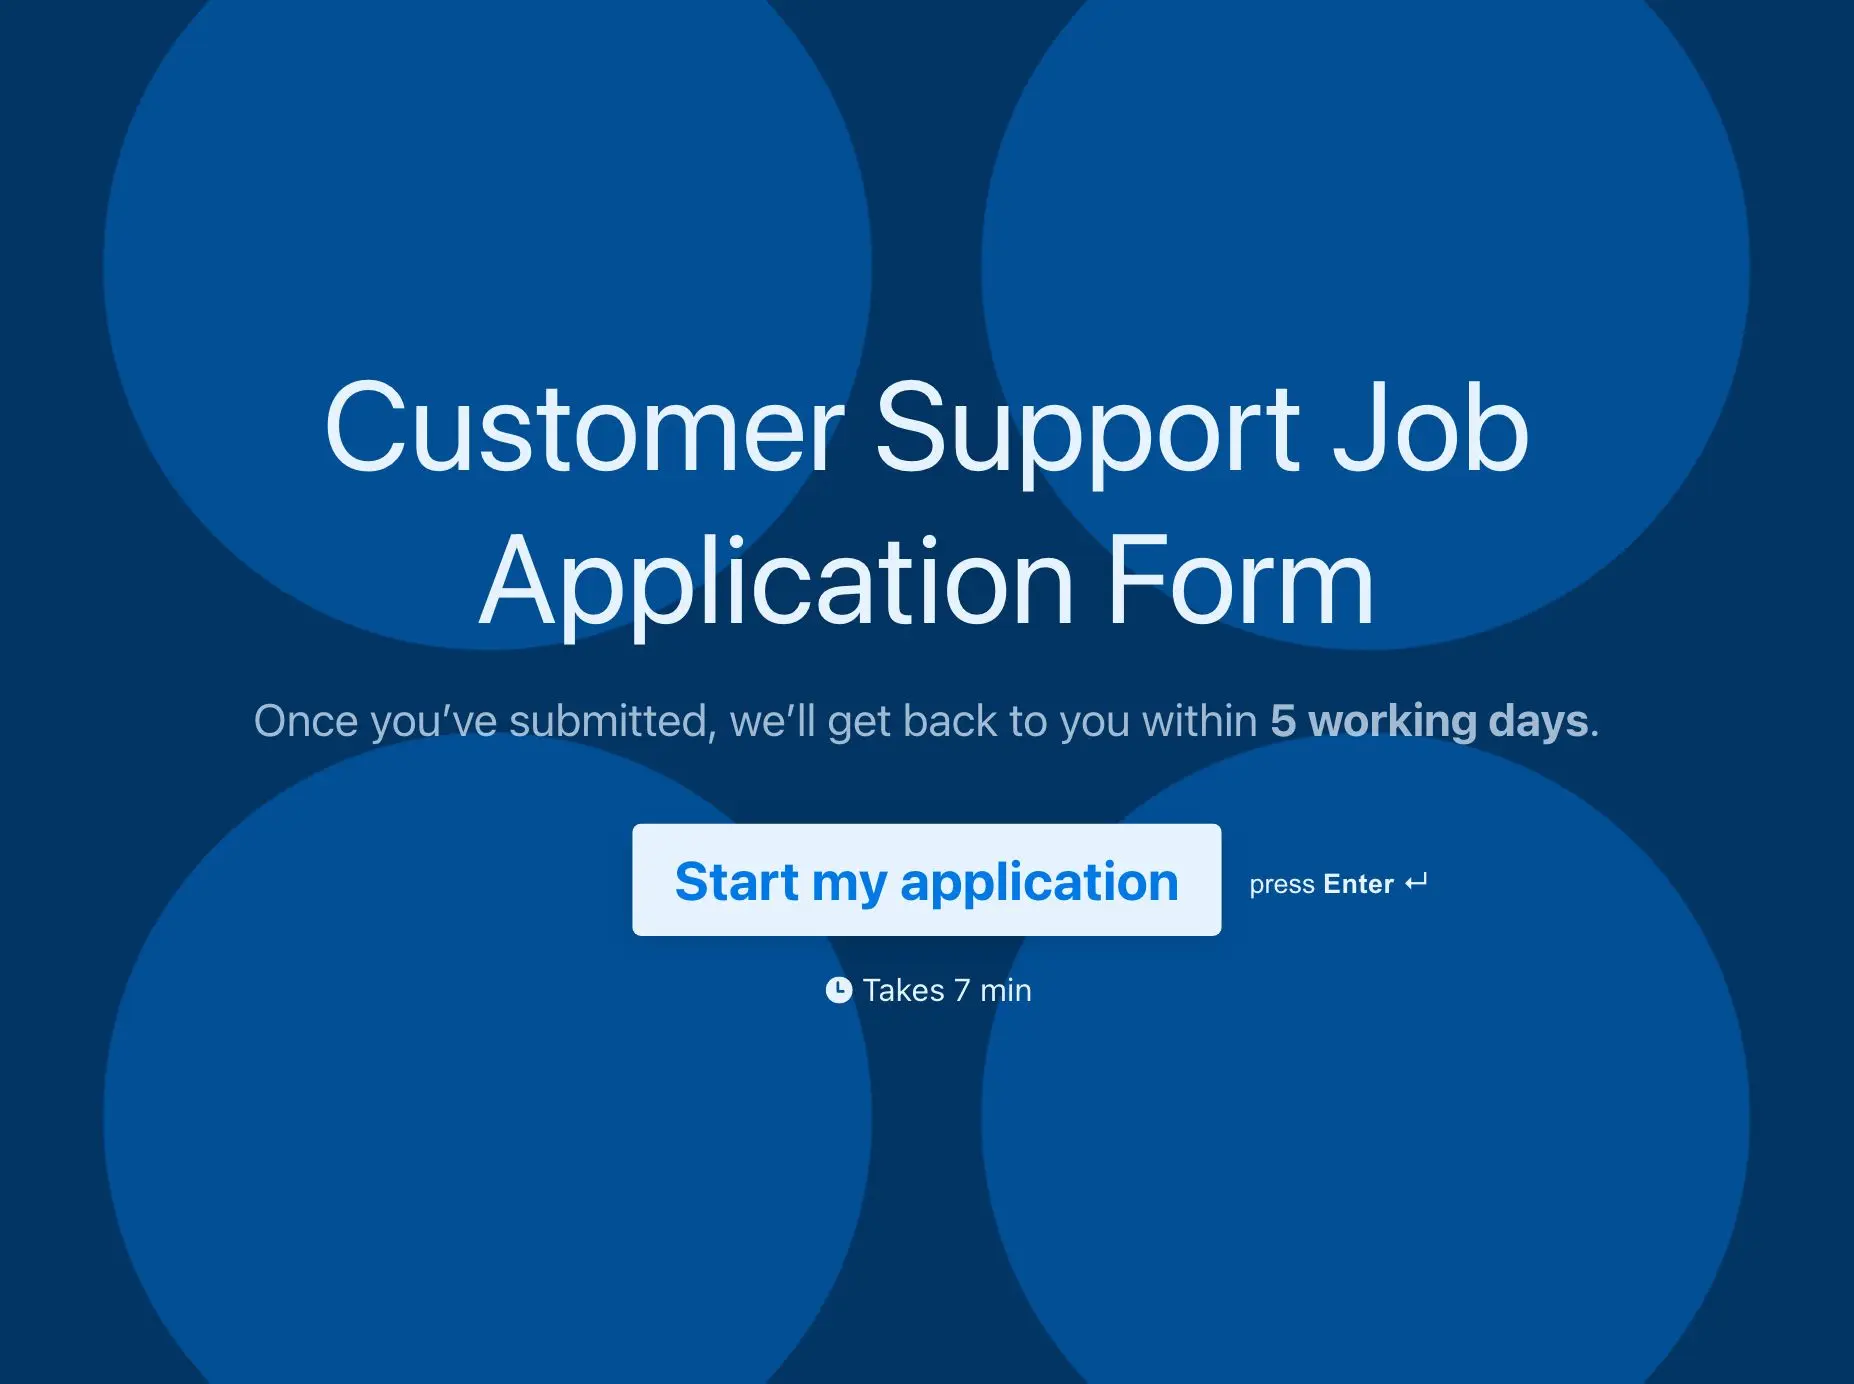 Customer Support Job Application Form Template Hero